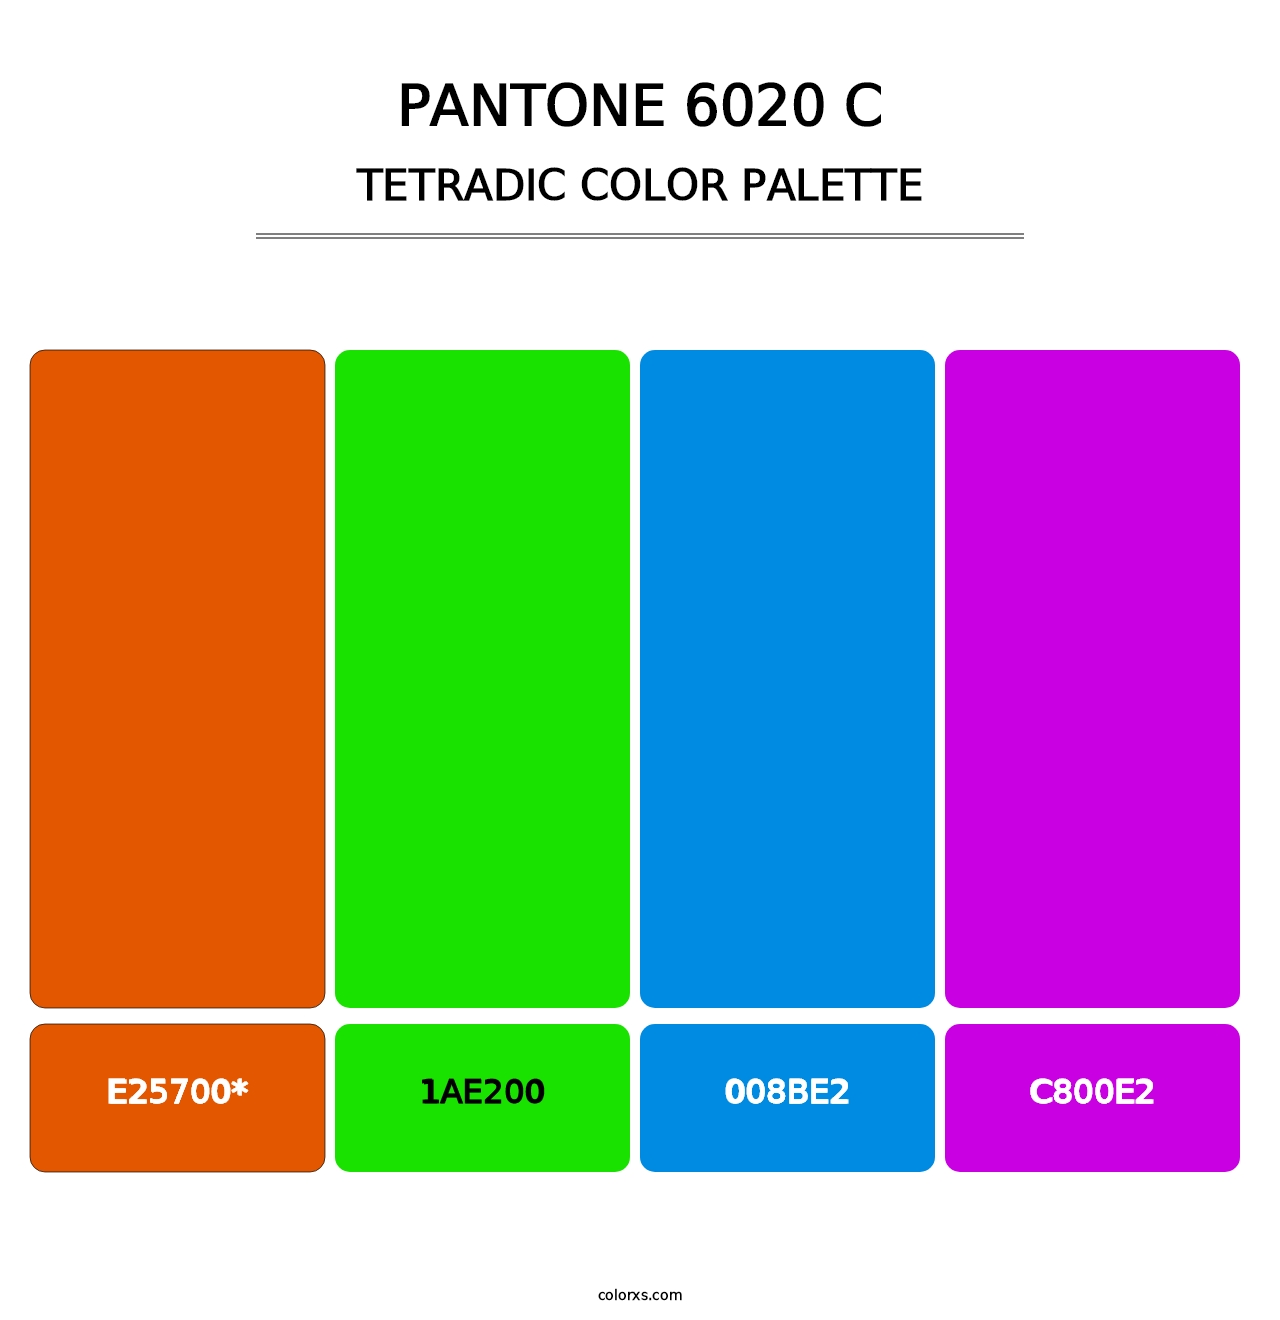 PANTONE 6020 C - Tetradic Color Palette